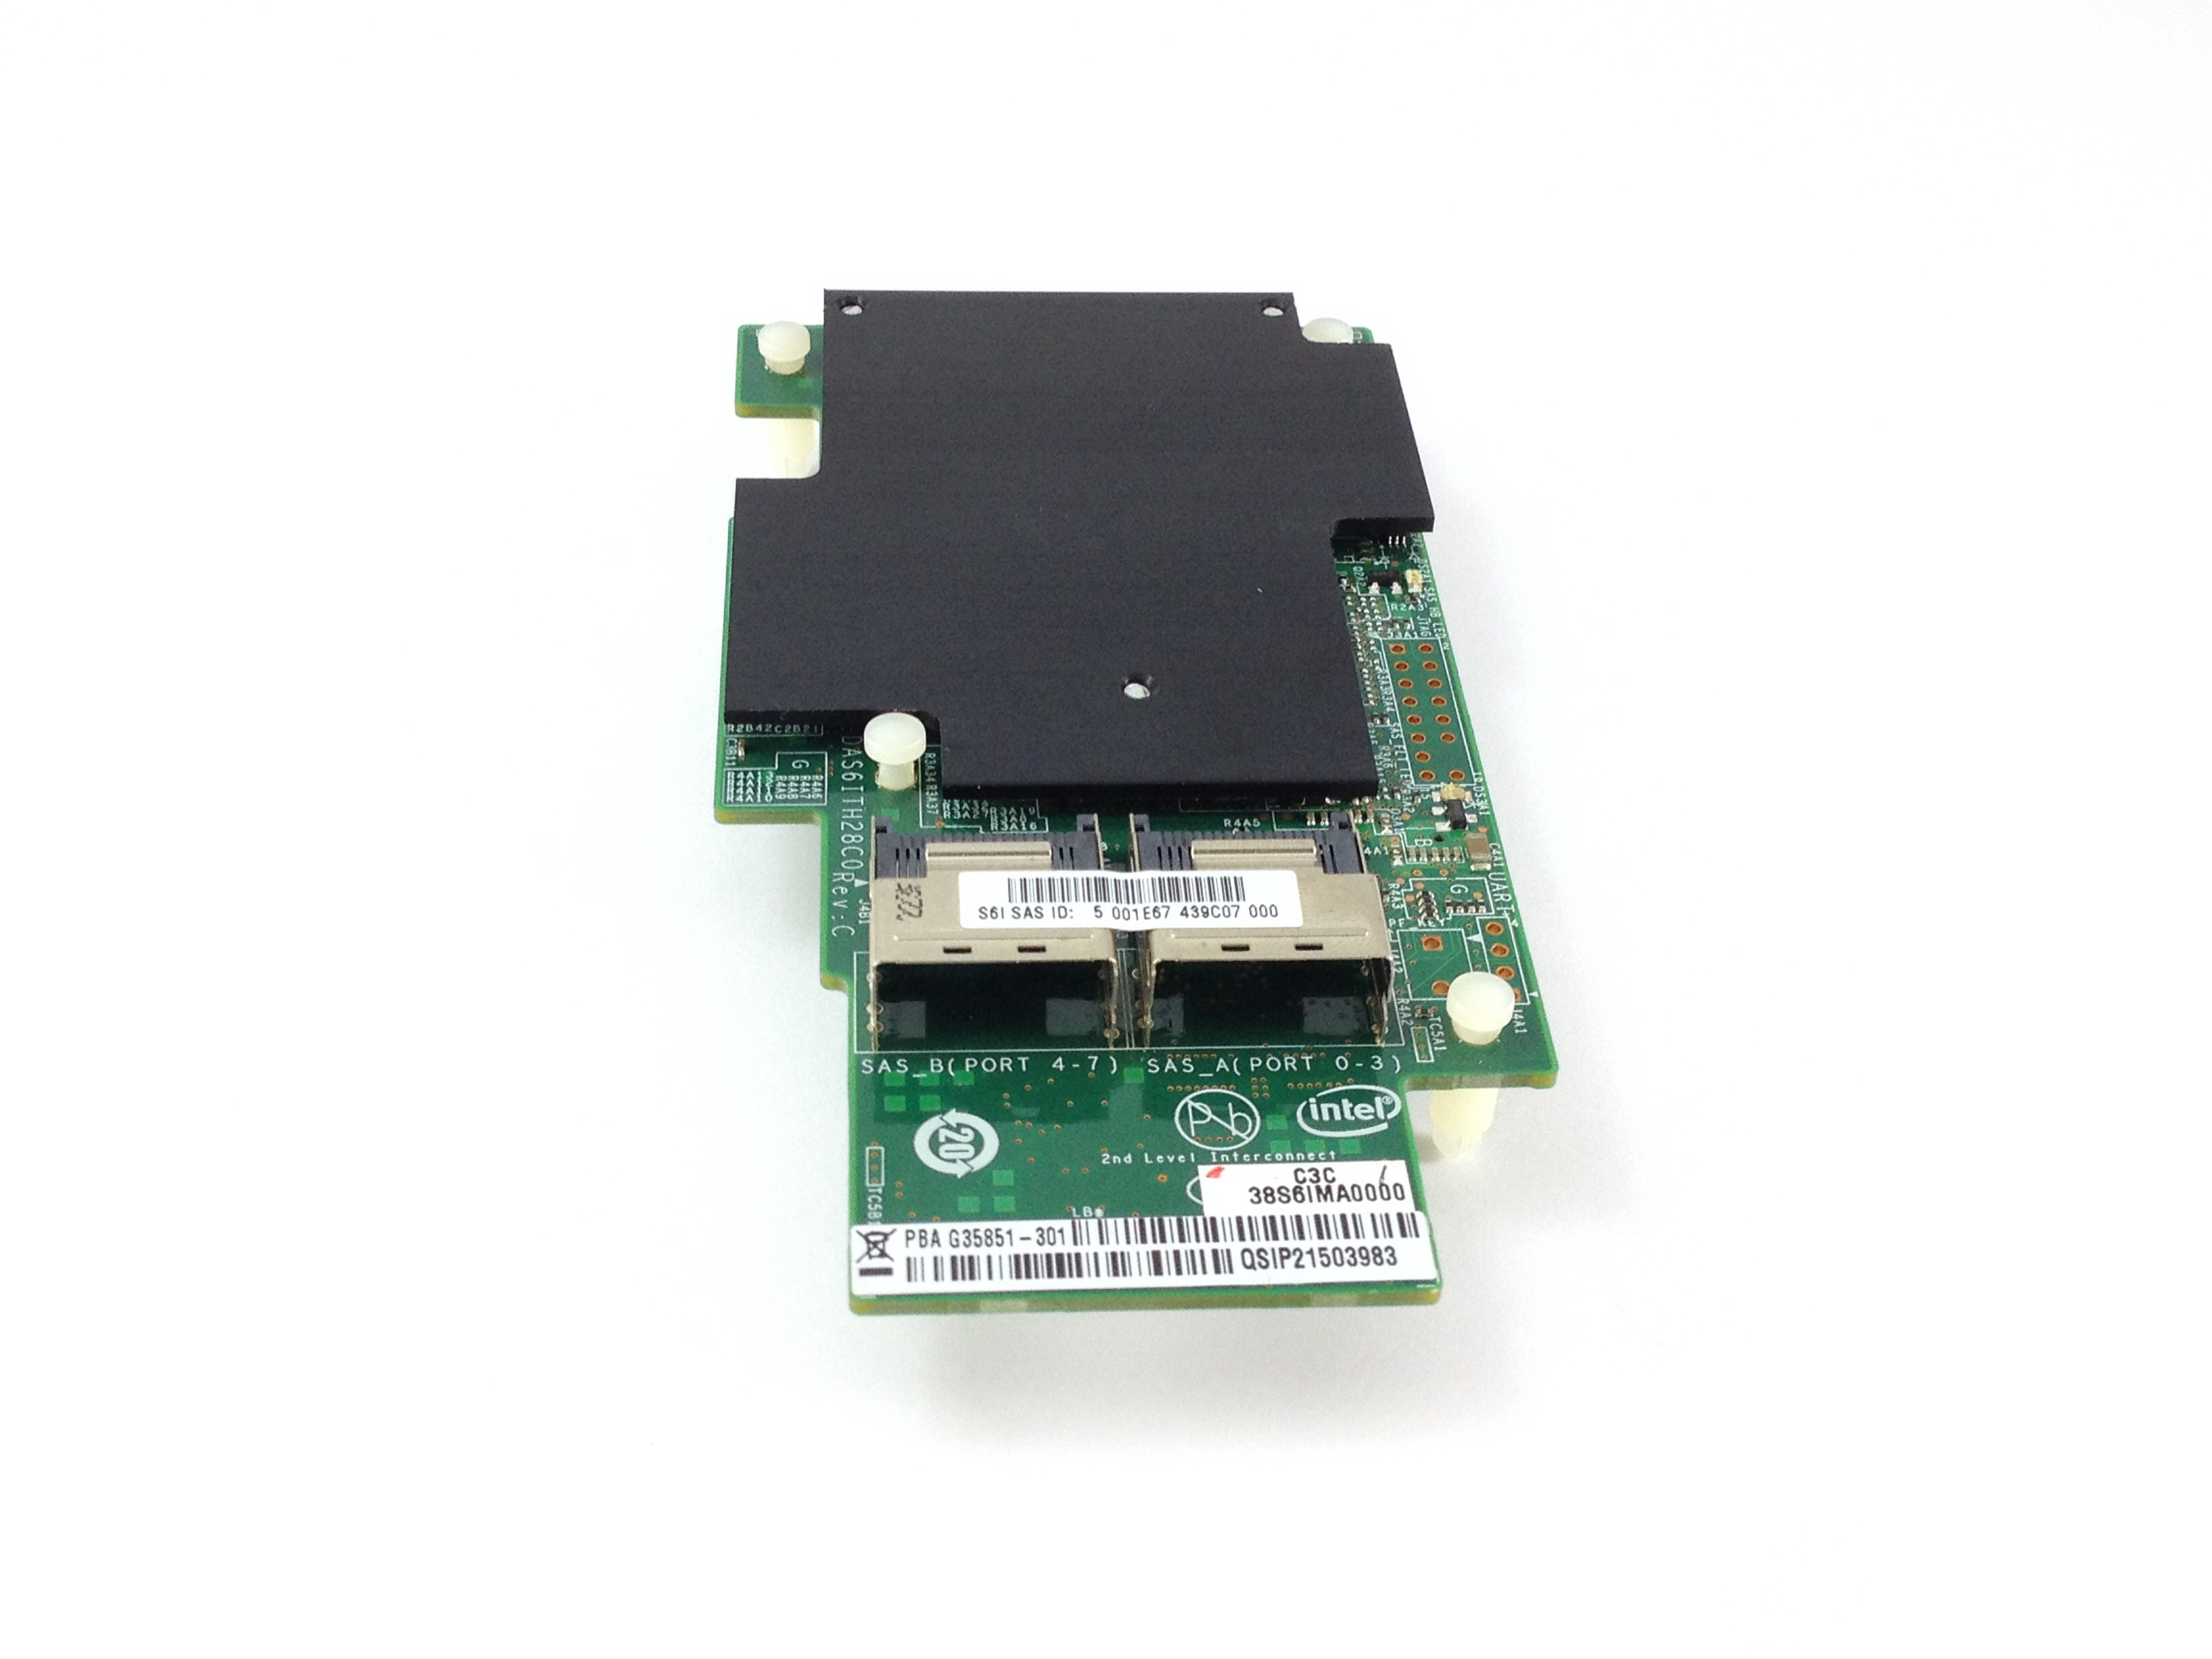 Intel LSI 2308 SAS 6Gbps 8-Port Integrated Raid Controller (G35851-301)